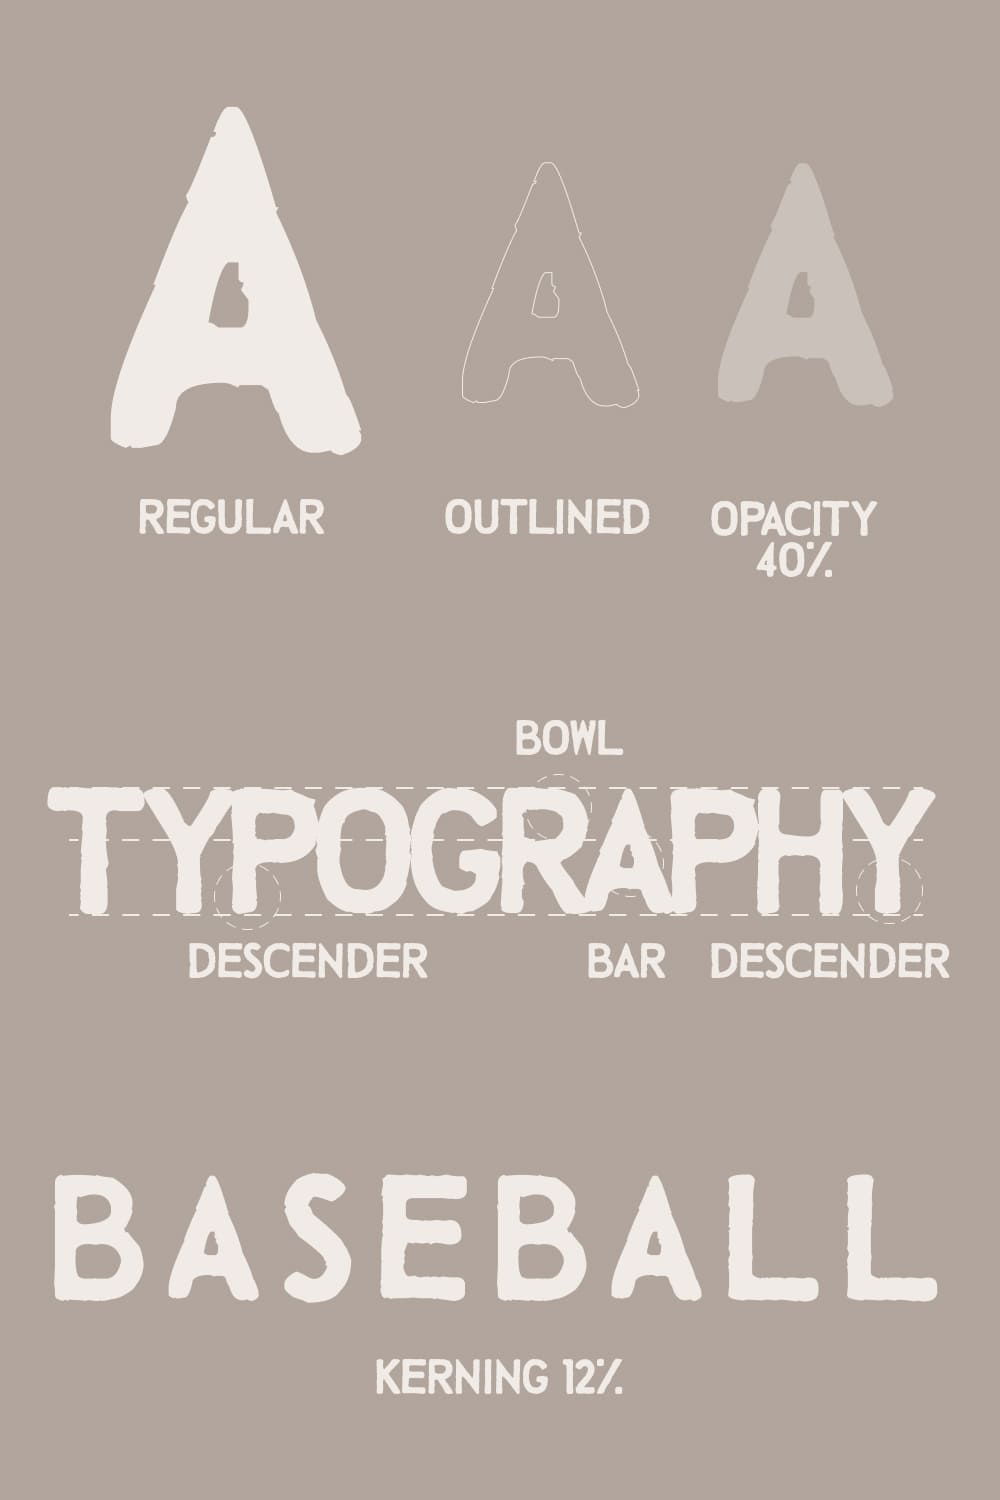 Styles of talking baseball font.